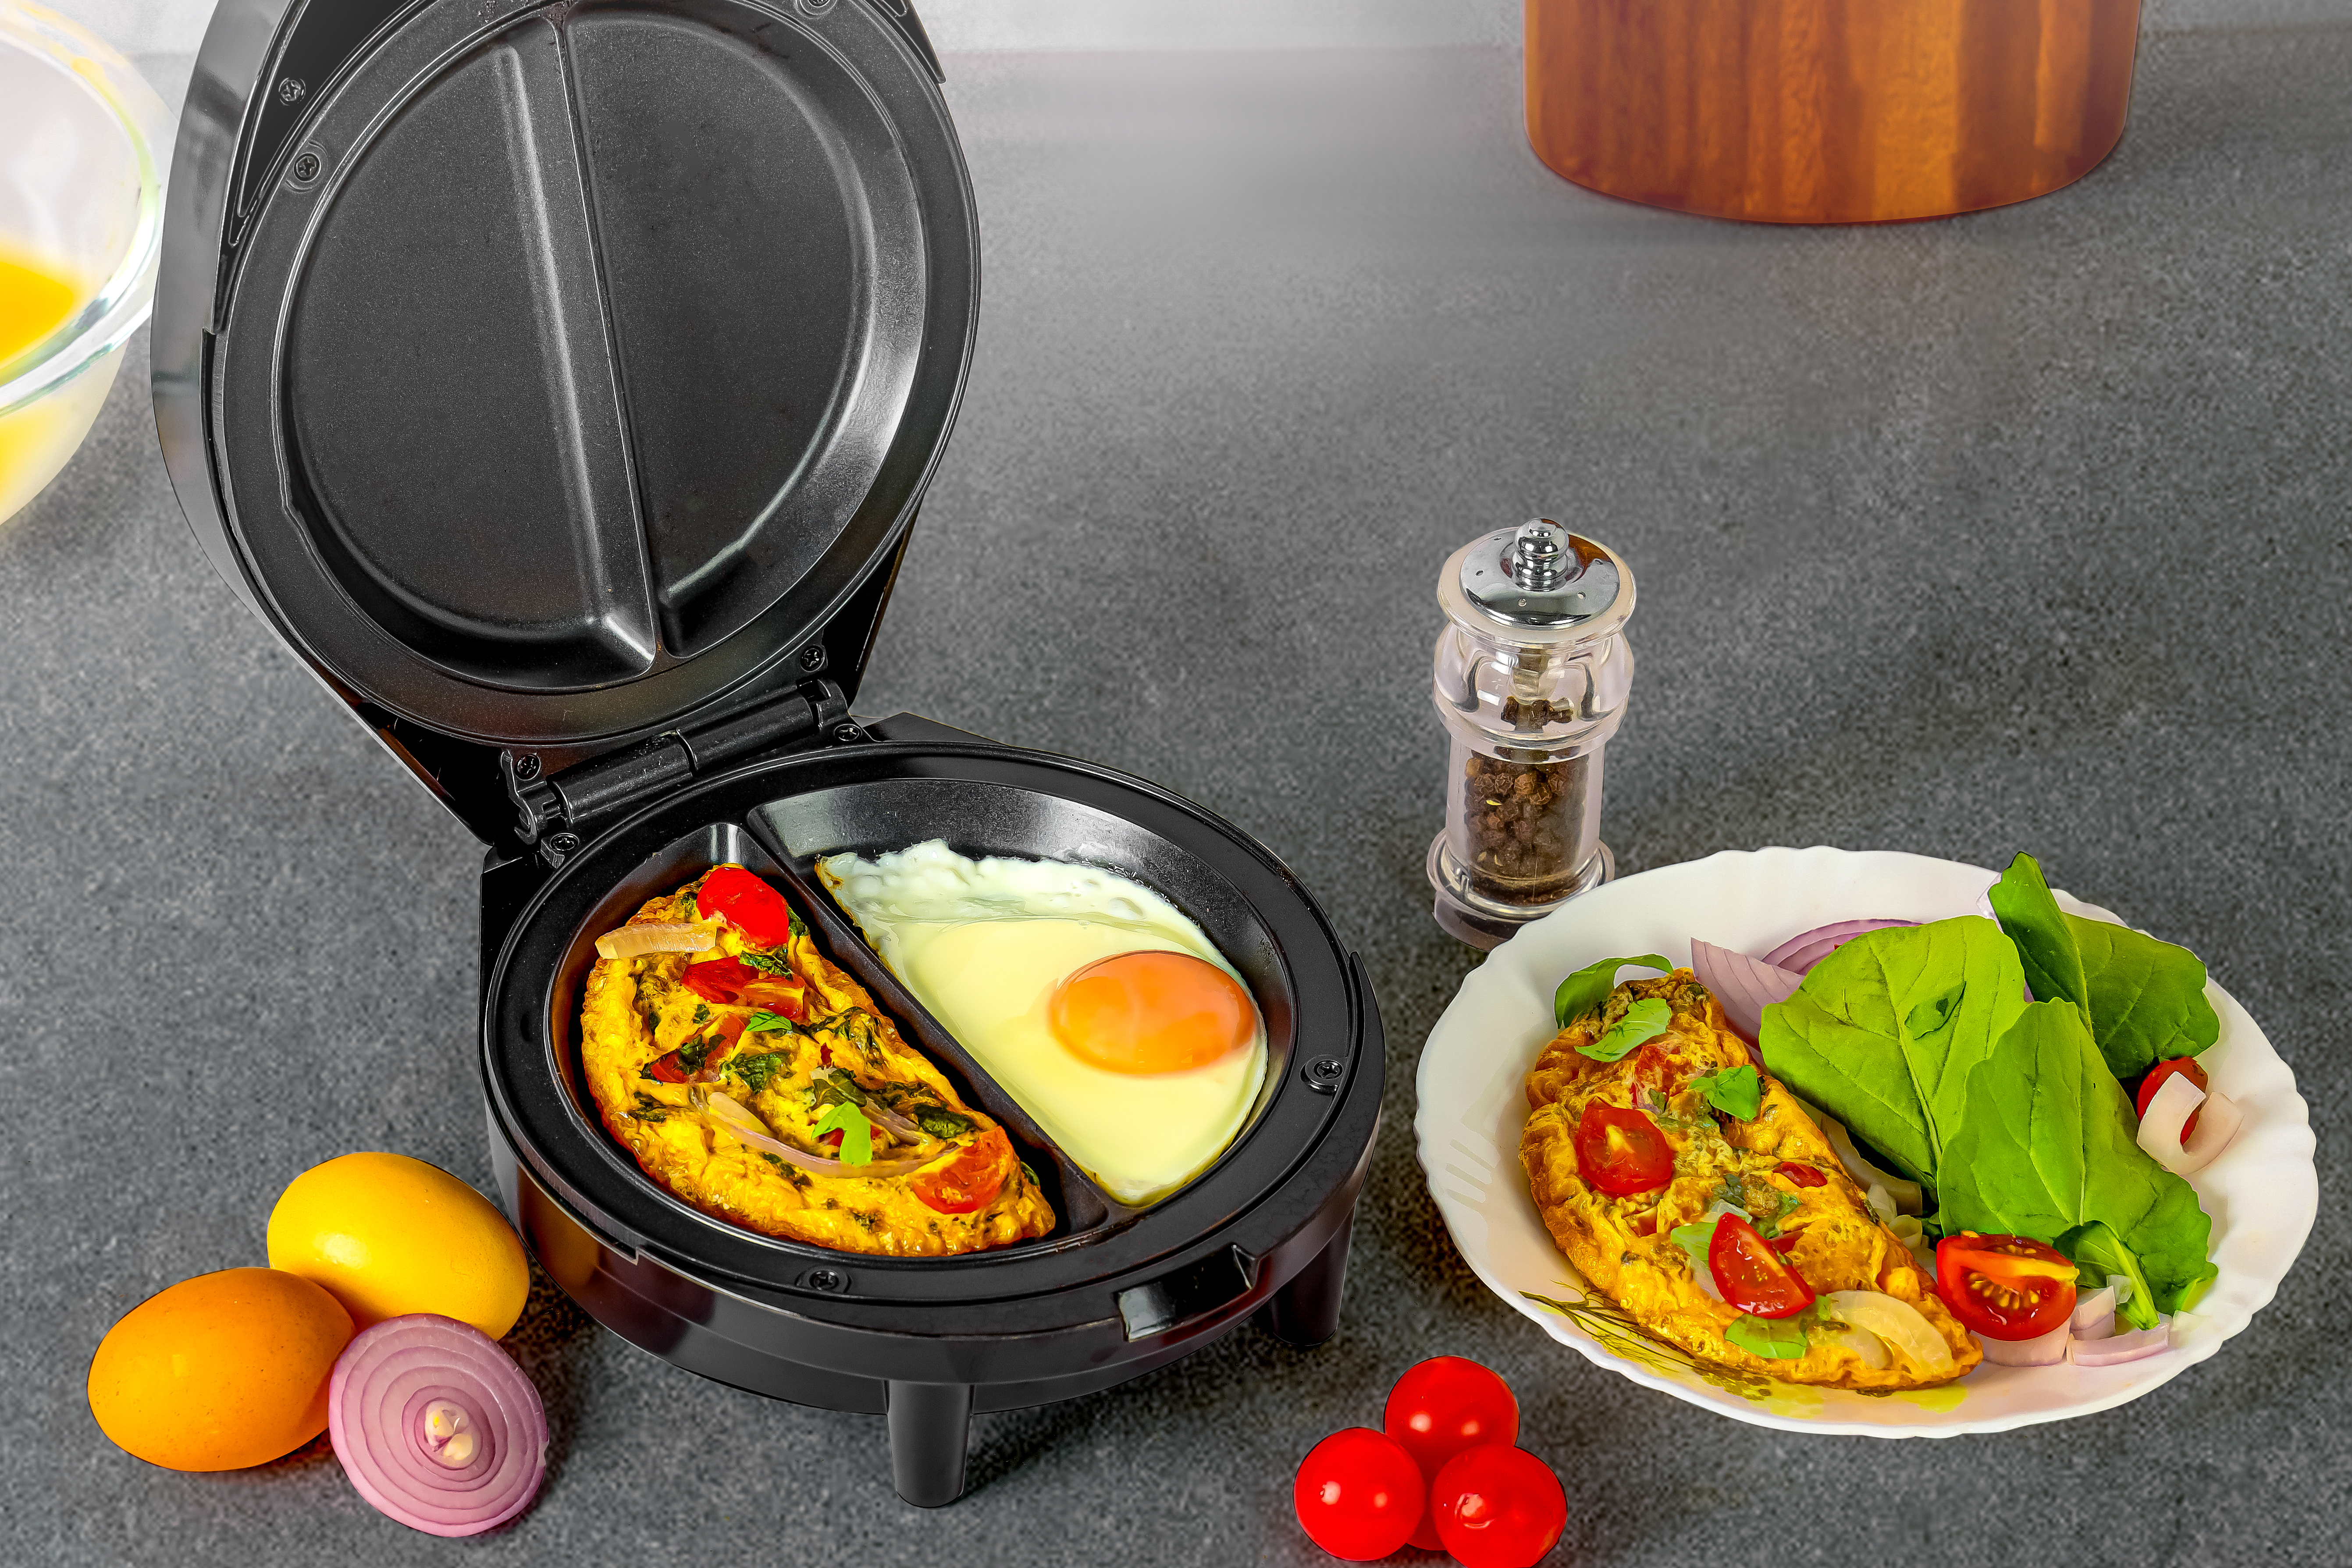 Omelette Maker Egg Fryer Pan Electric Non Stick 1000W Scrambled Cooker  Geepas